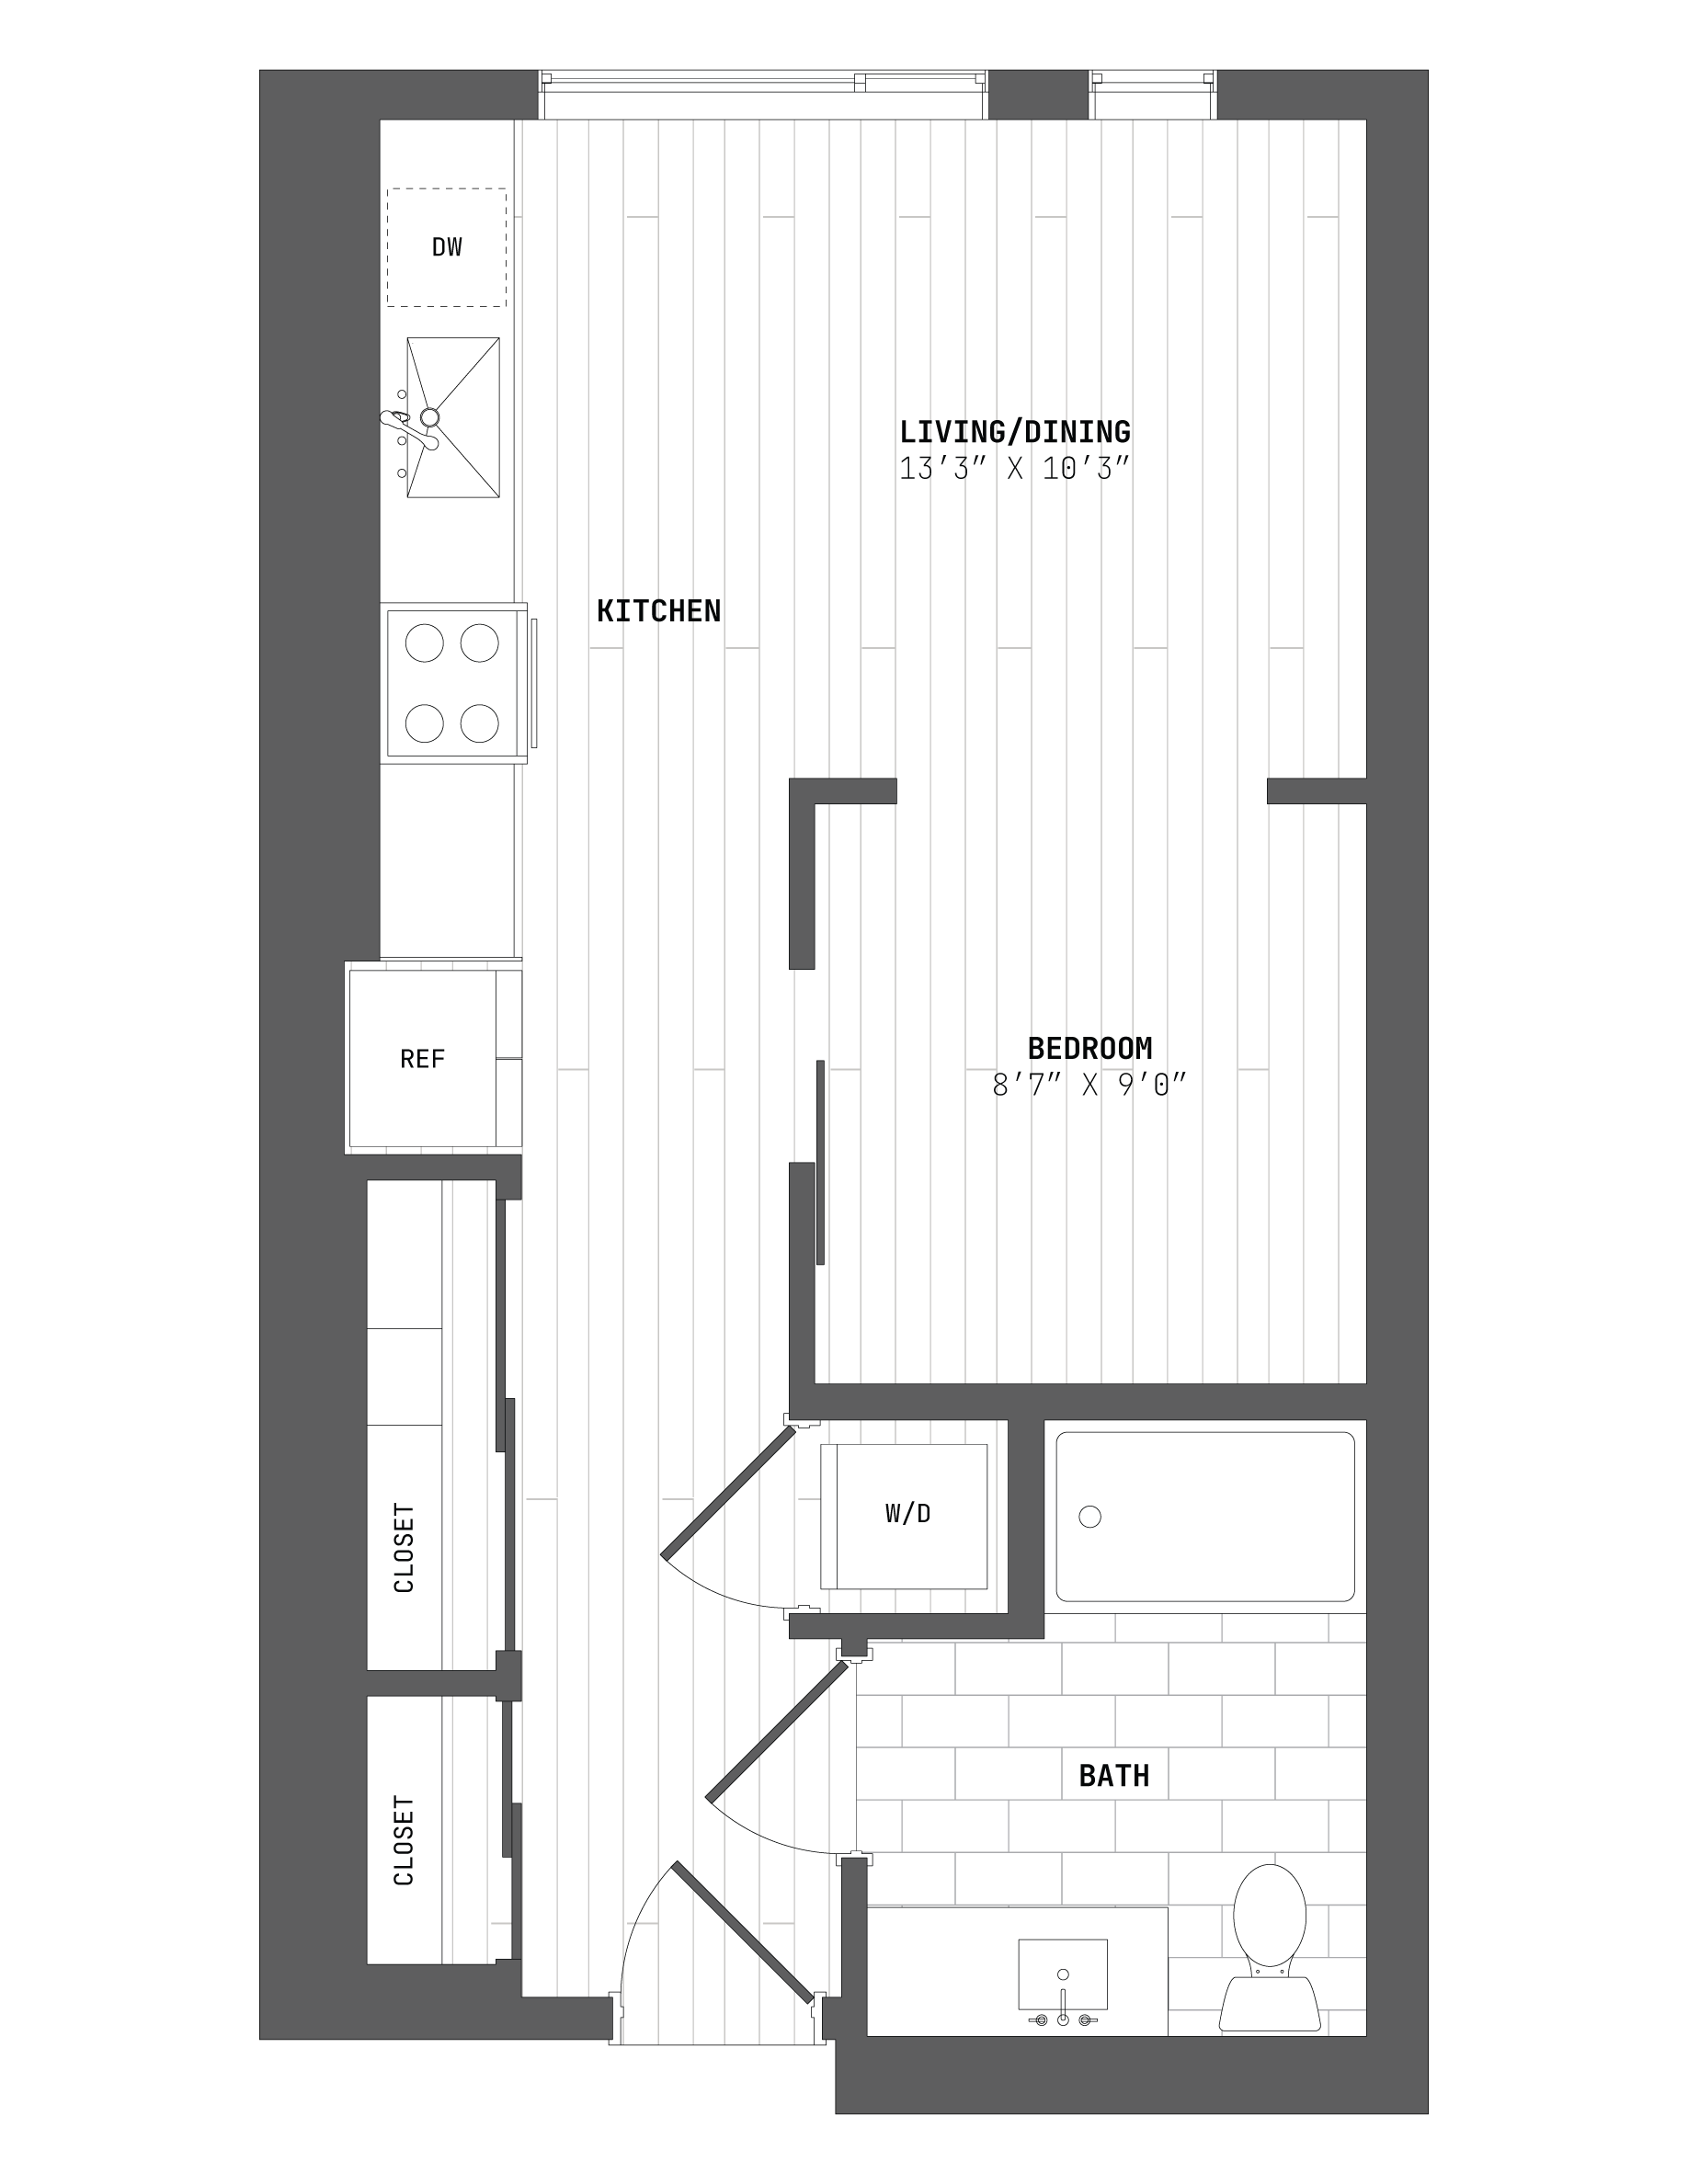 Apartment 4785228 floorplan